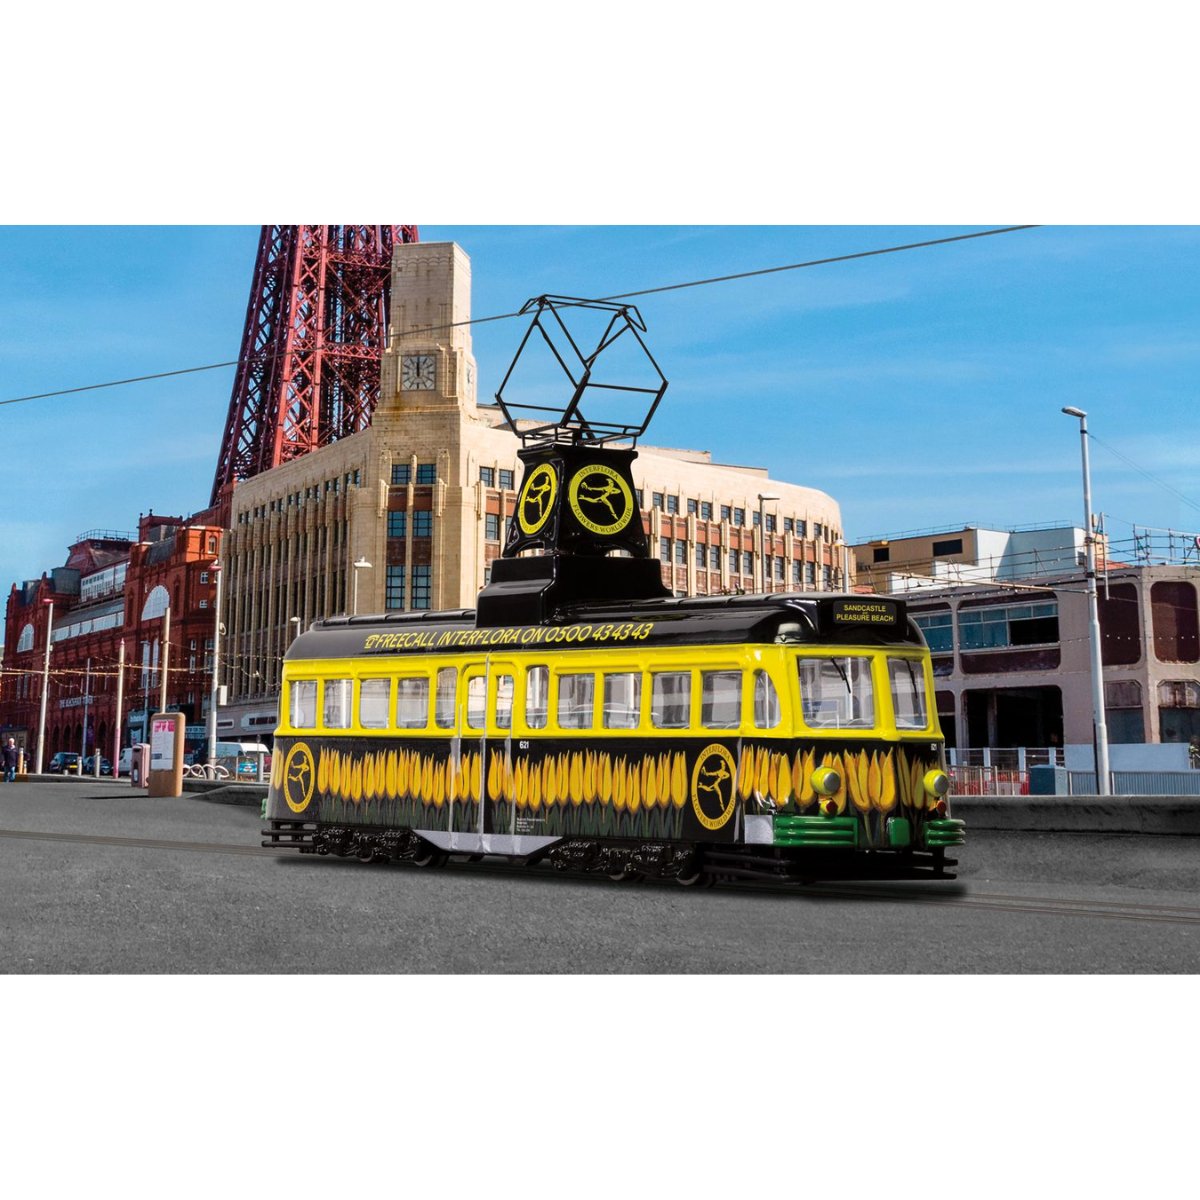 Corgi OM44013 Brush Railcoach Blackpool Transport 'Interflora' - Phillips Hobbies